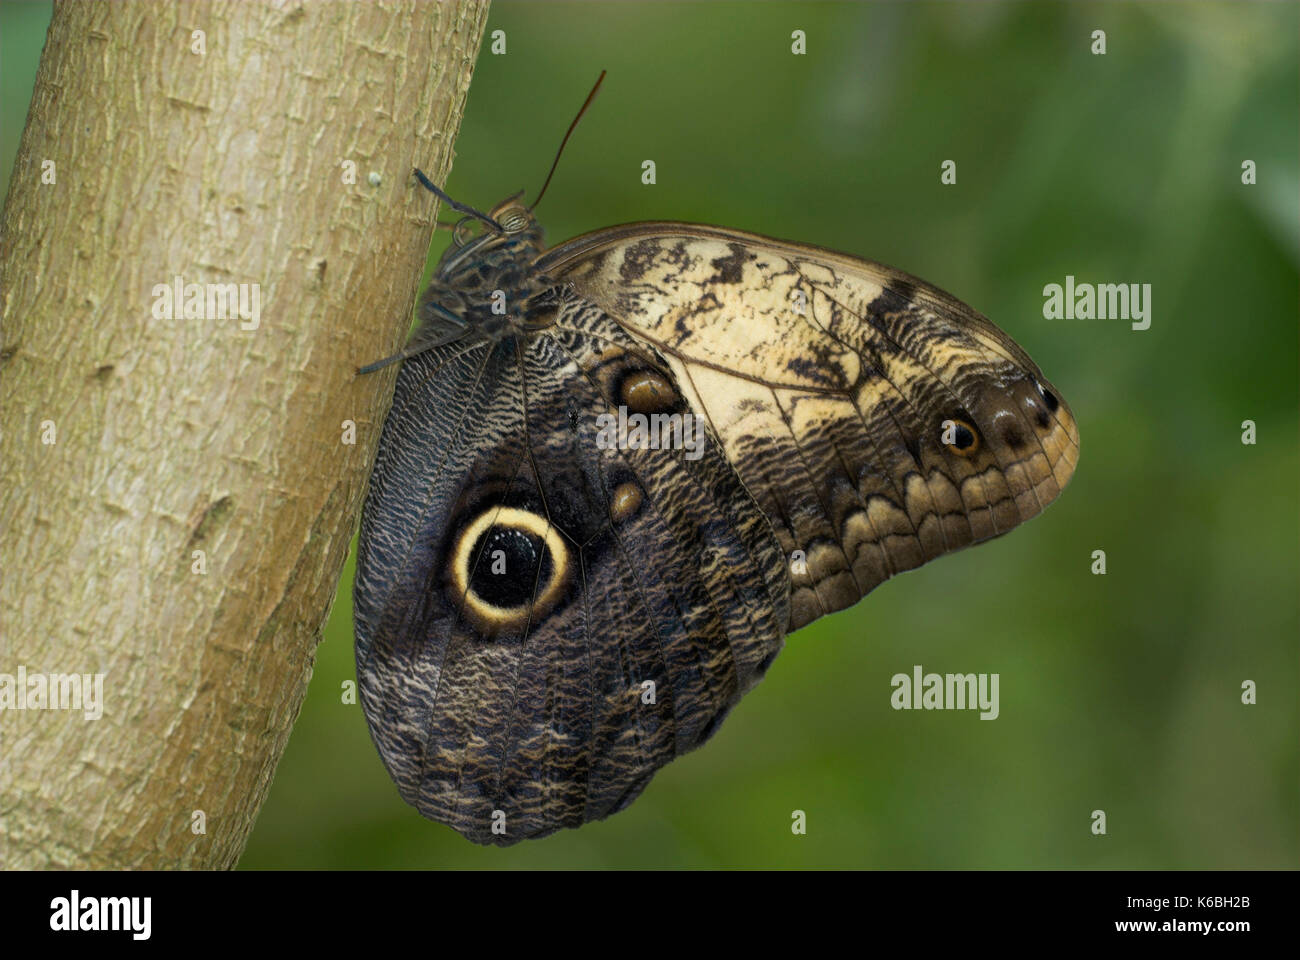 Owl Butterfly, Caligo species, perched on tree trunk showing false eye spots on wings, Stock Photo